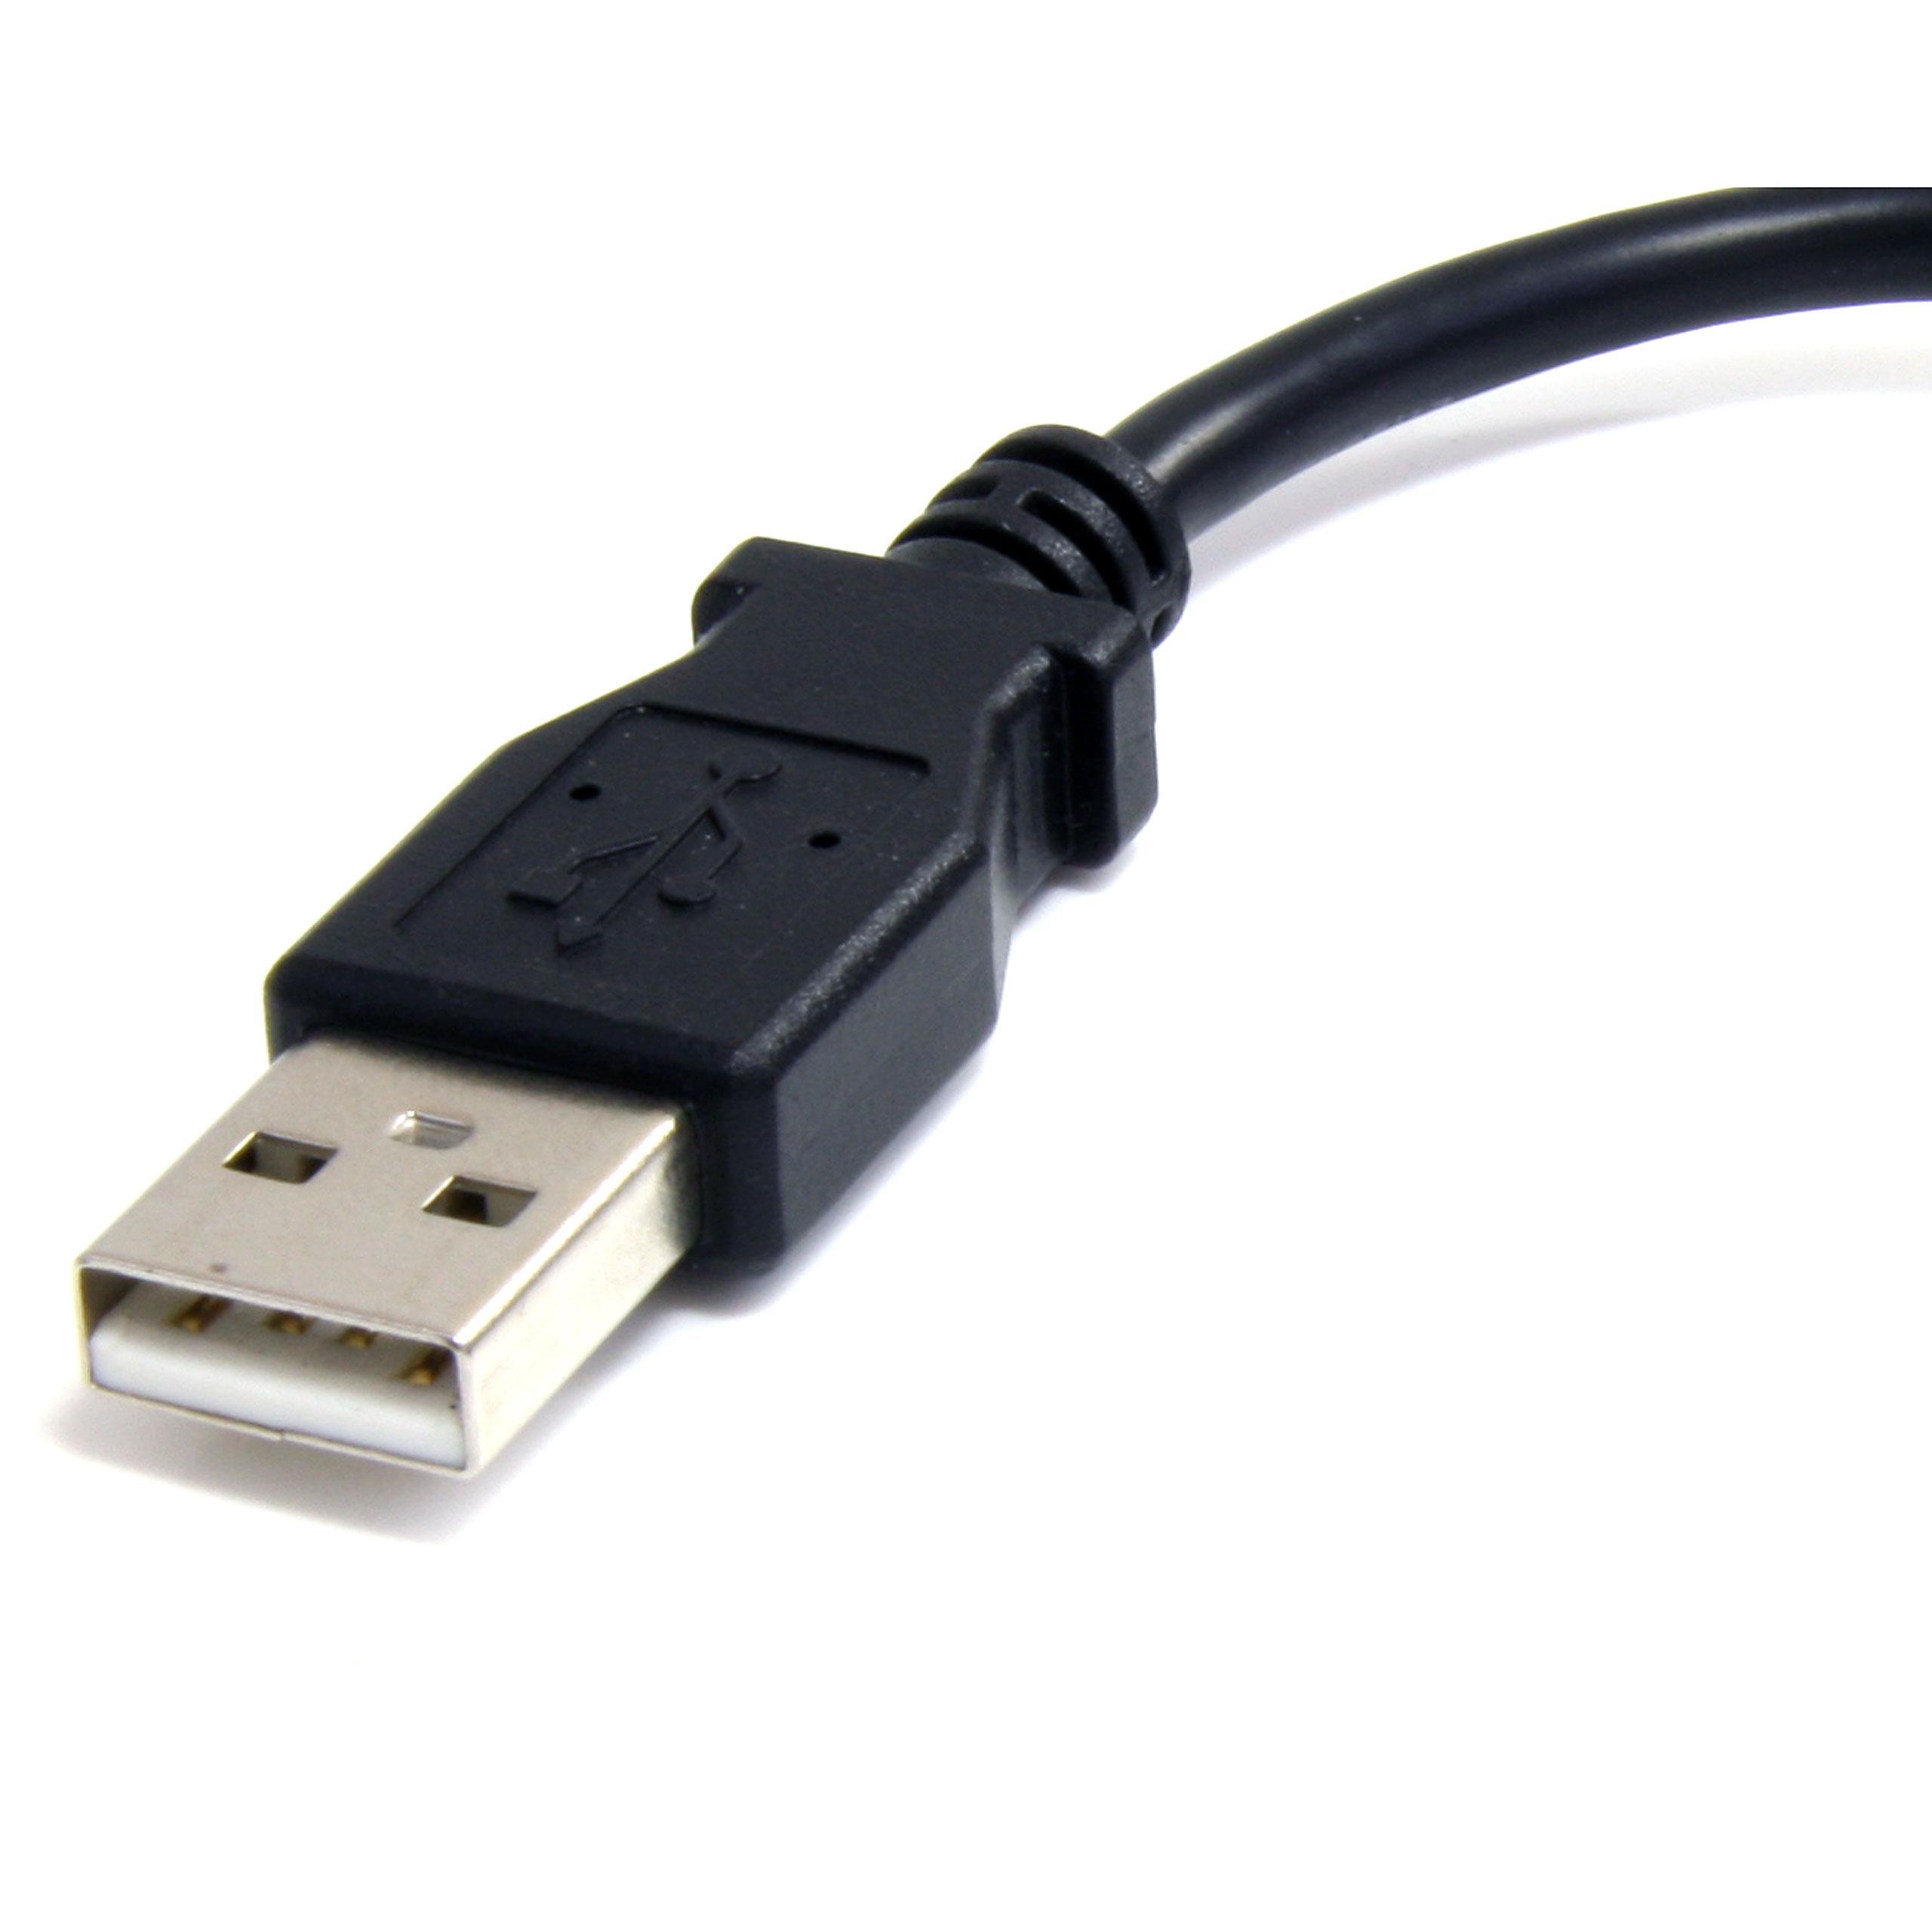 Amazon.com: StarTech.com 6 Inch Micro USB Cable - A to Micro B ...